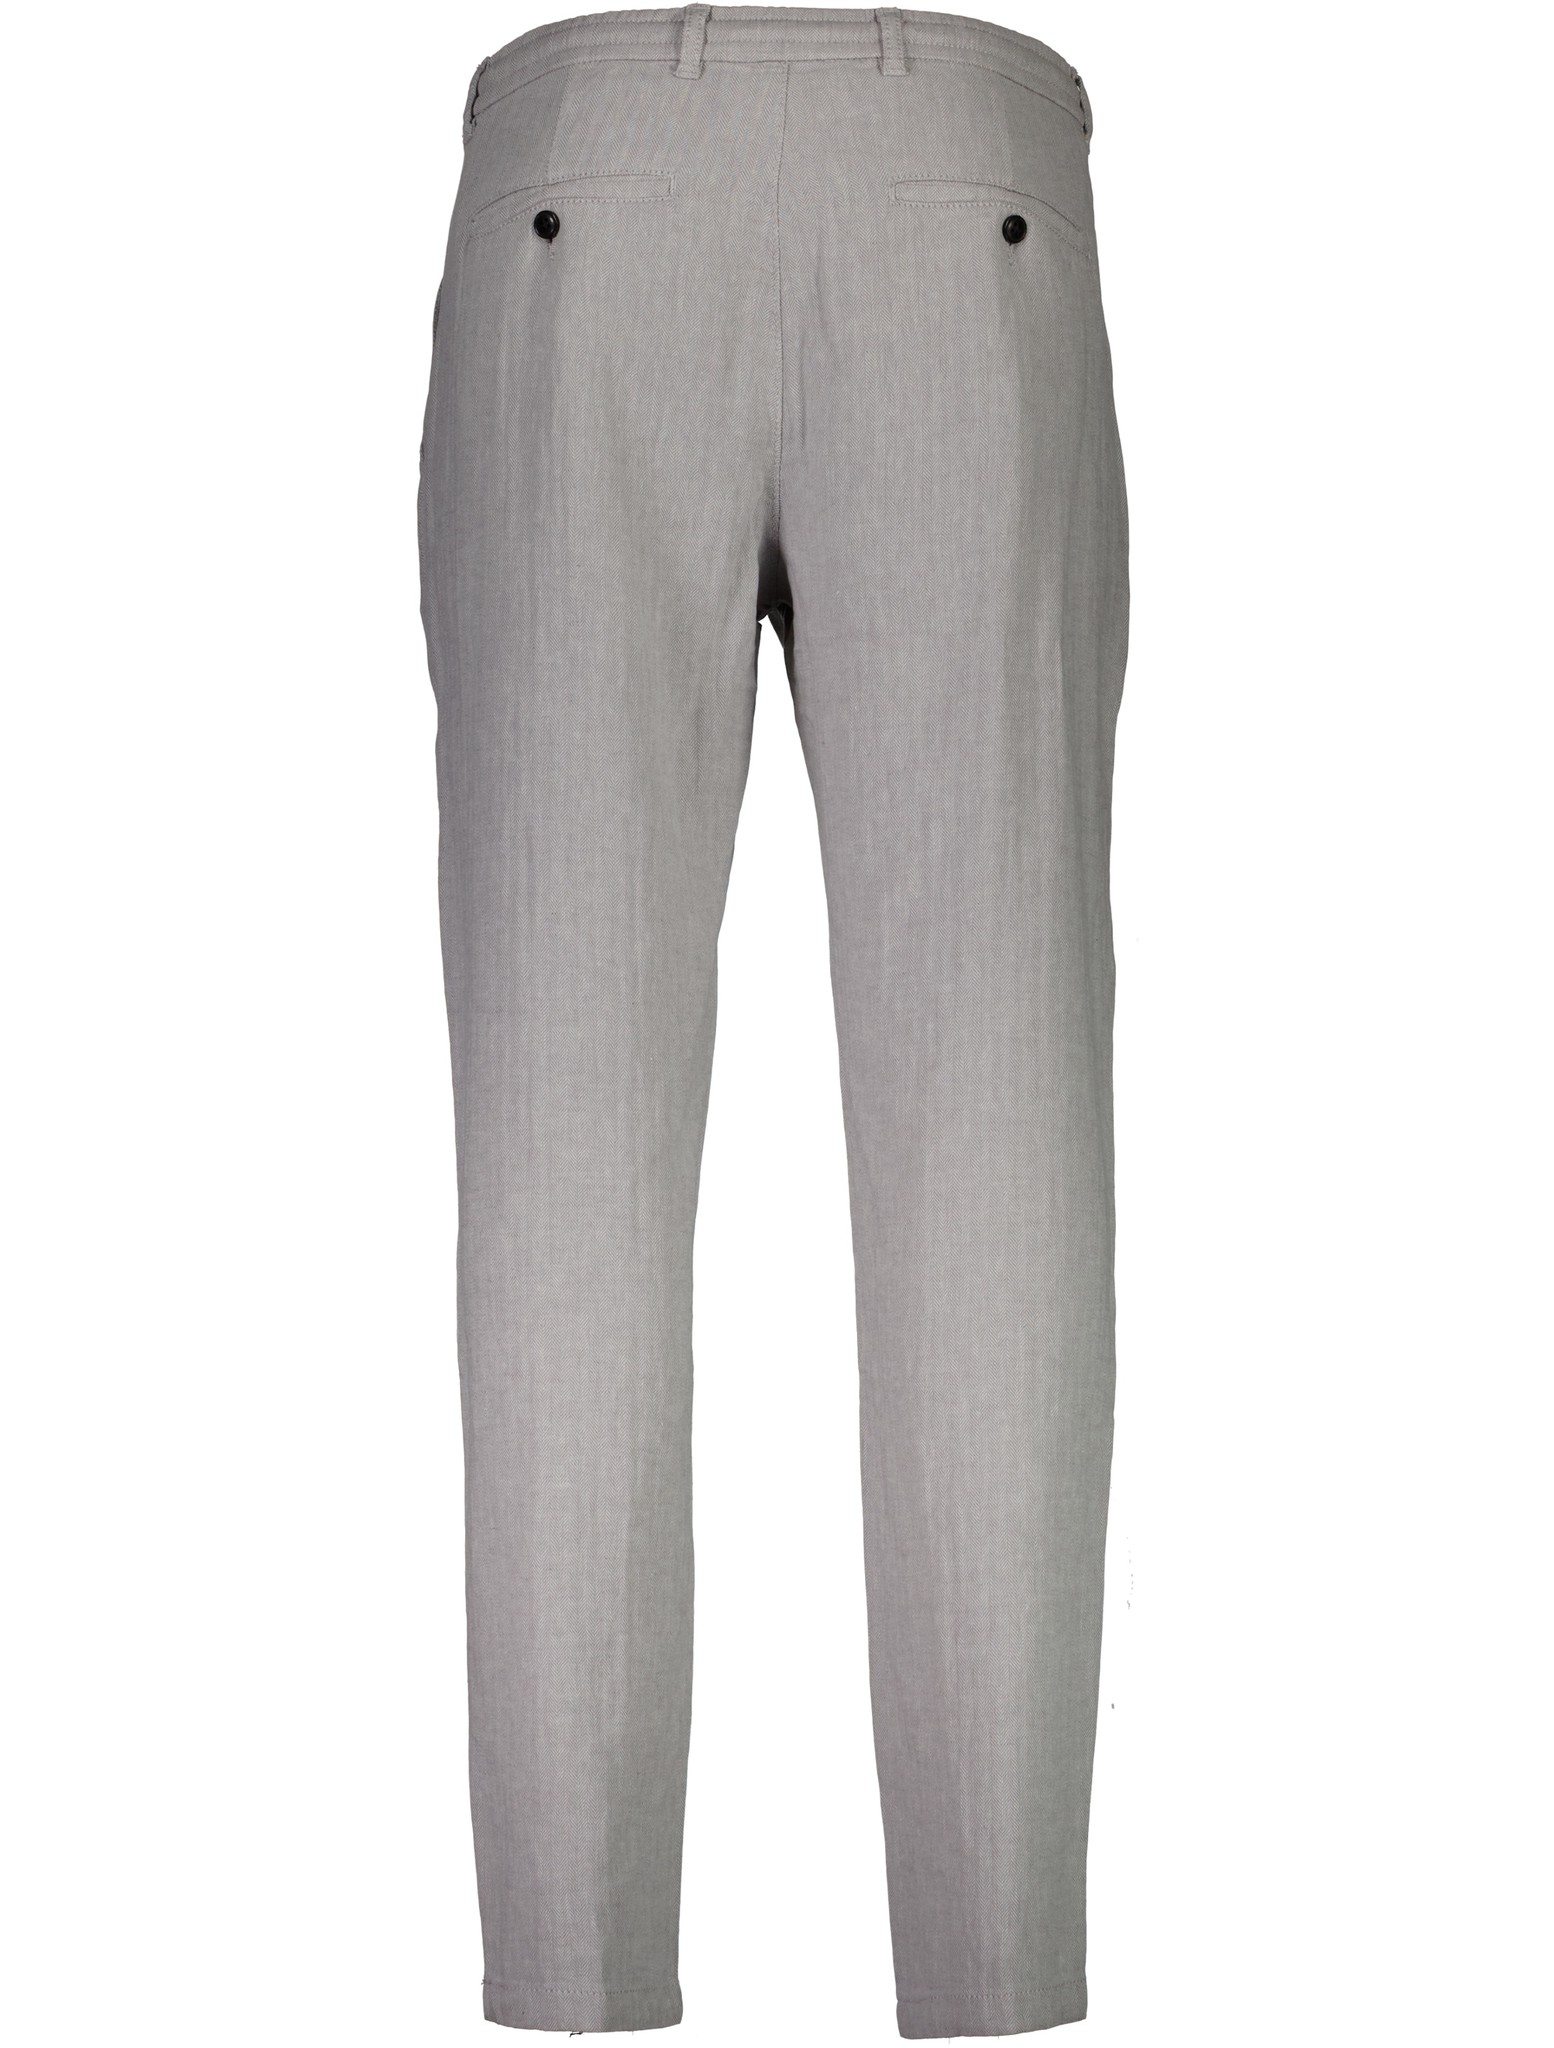 Linen Blend Herringbone Pants Style: 30-003020US